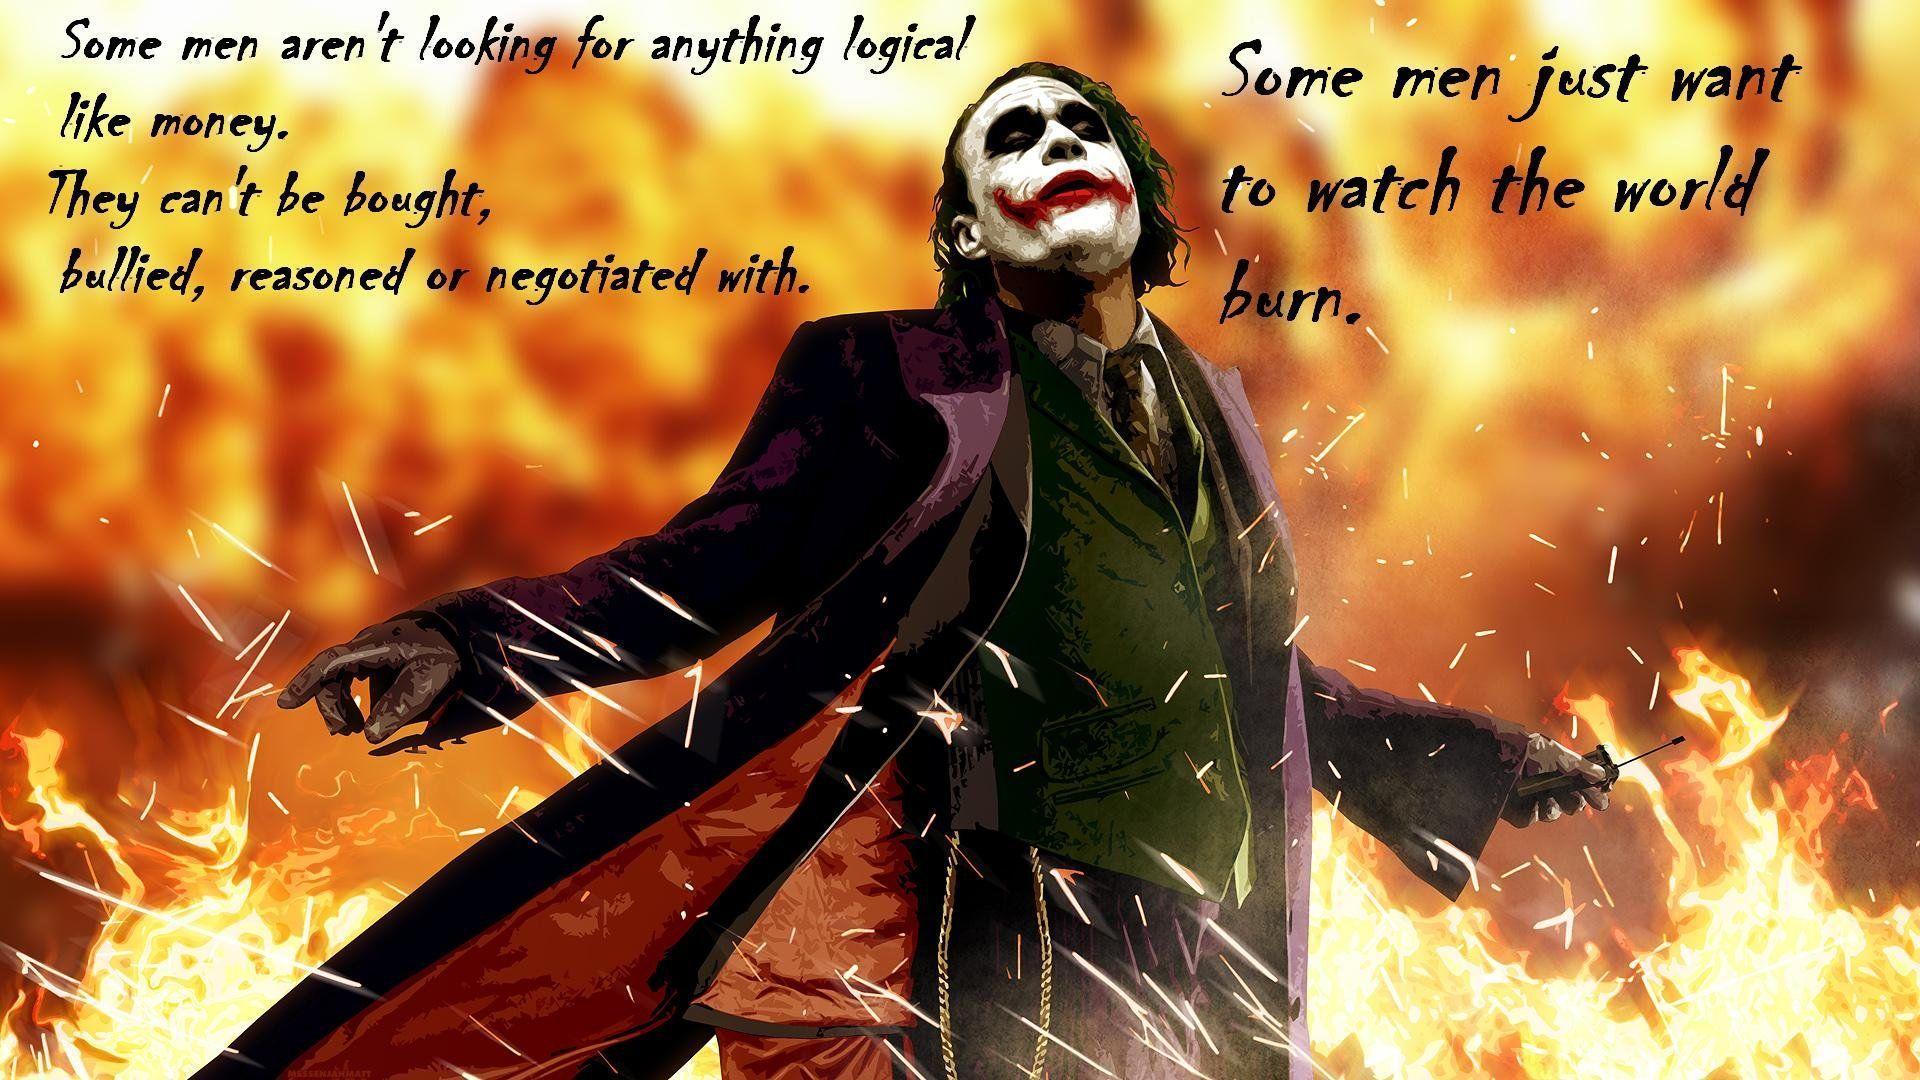 the joker quotes. World Burn Joker Quote. Joker Quote HD